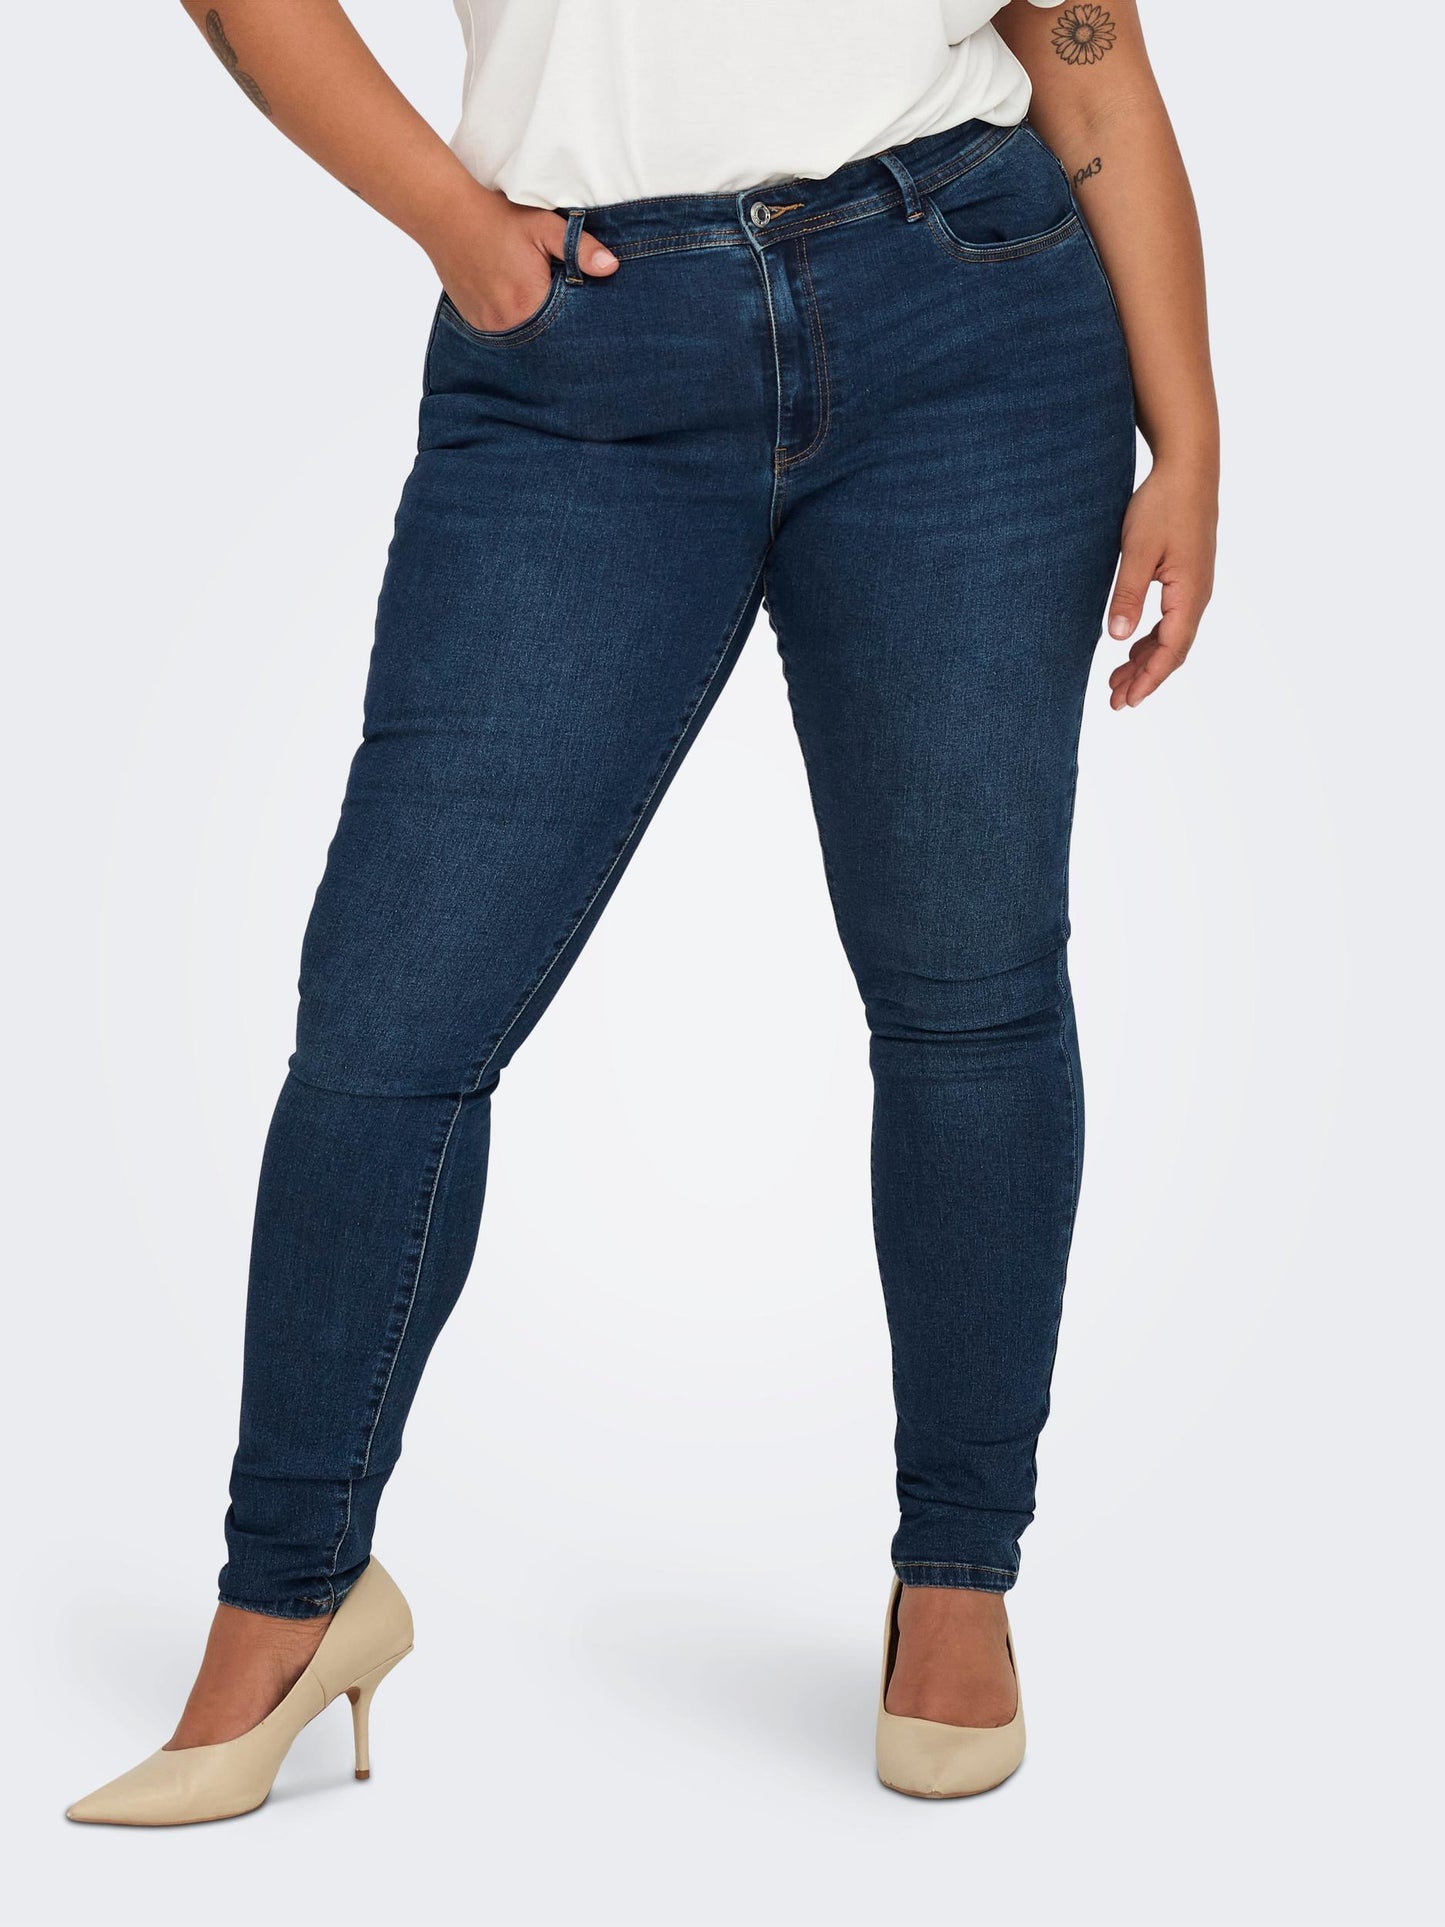 Jeans Carsally Mid Skinny Denim Bj581 Only Carmakoma